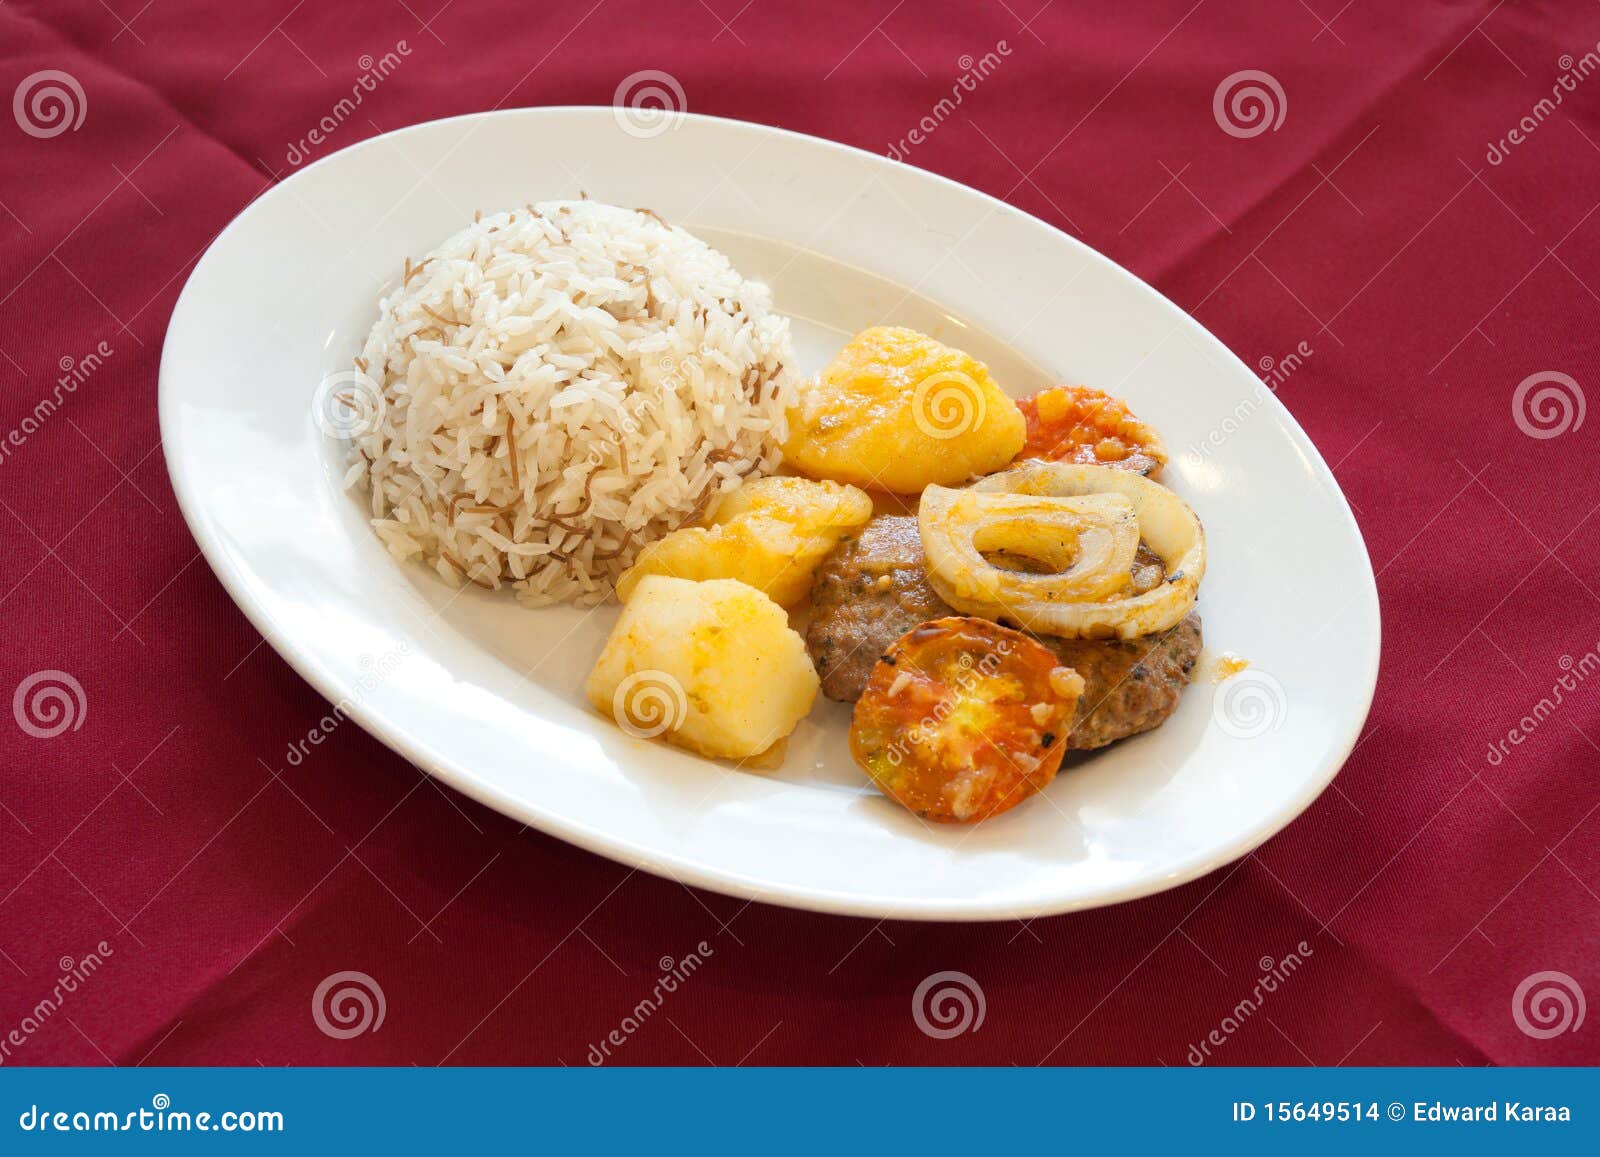 kofta with rice, lebanese food.